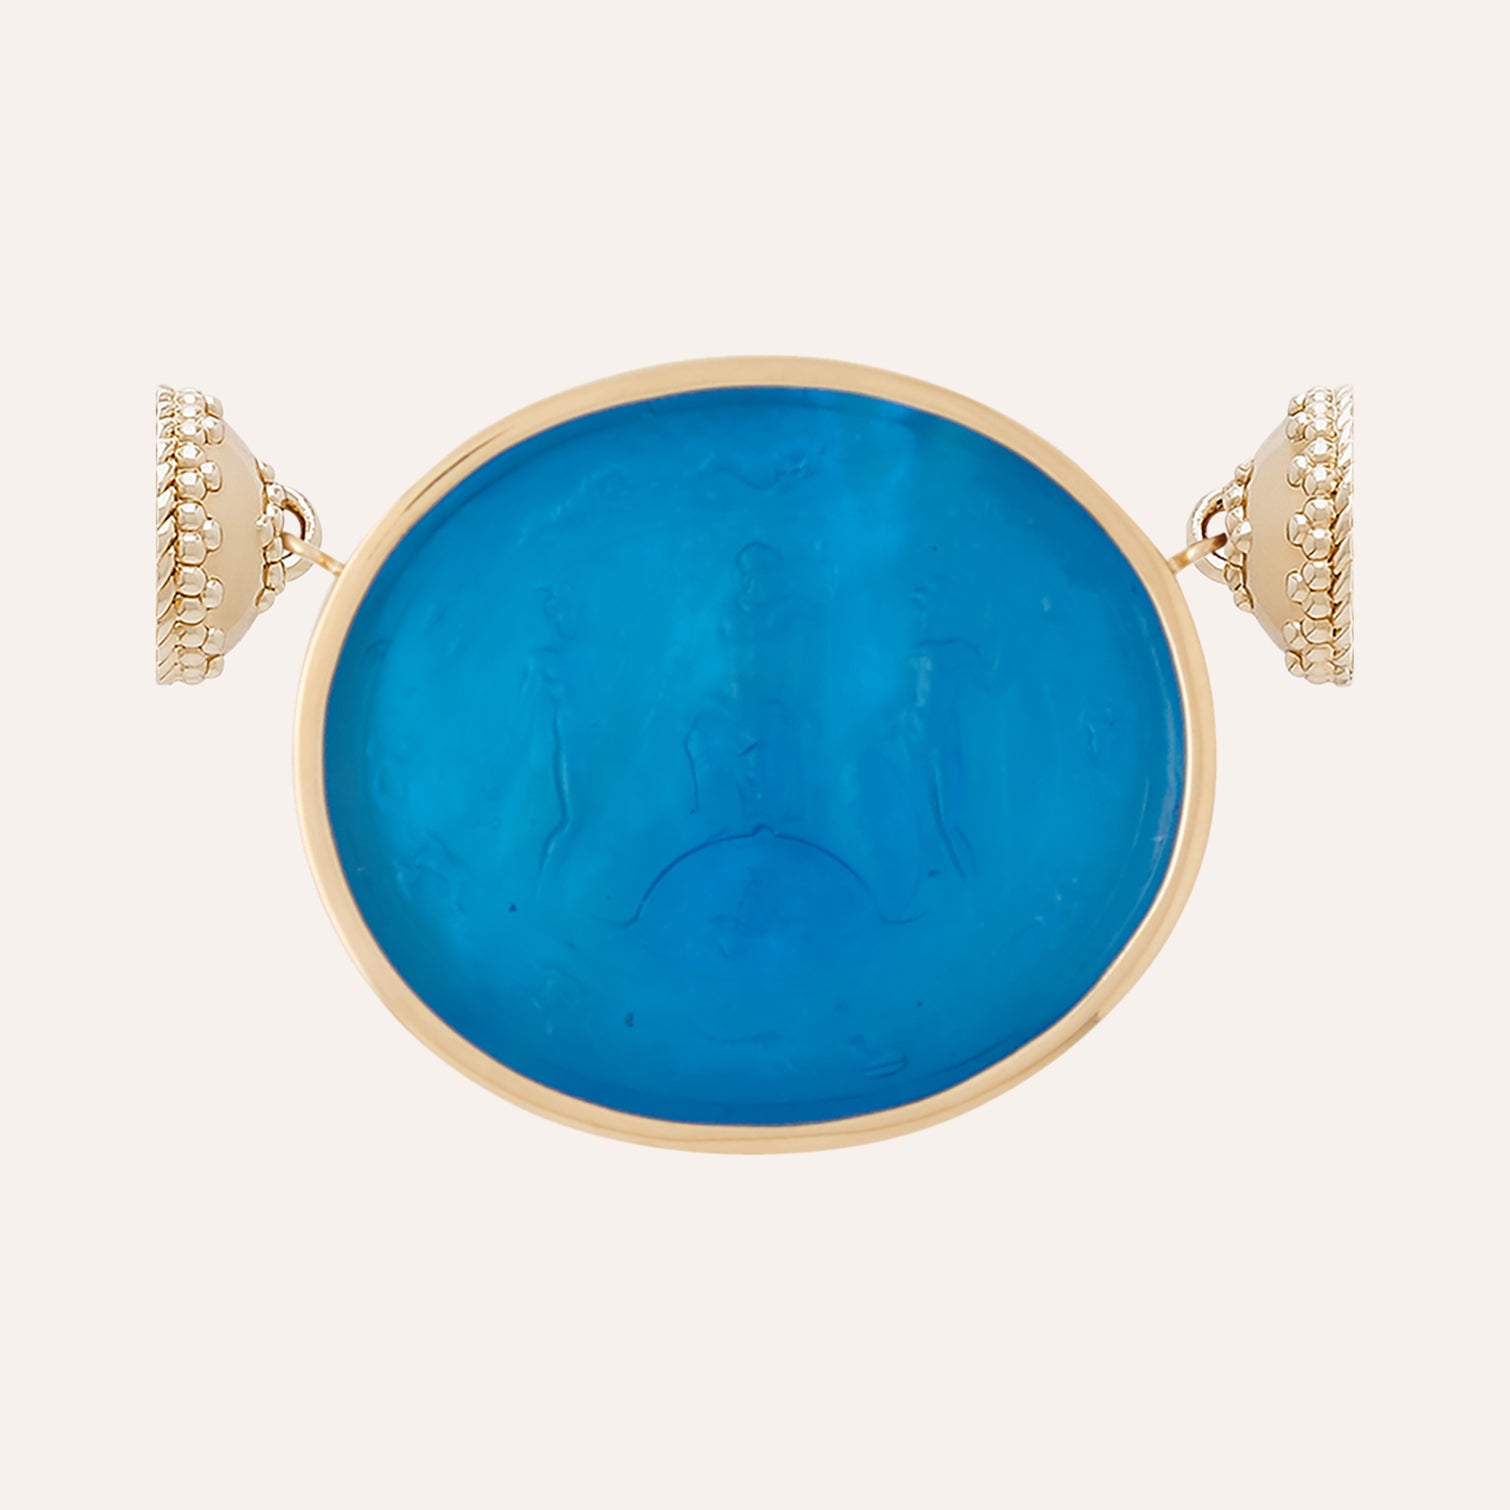 Classic Gods Capri Blue Italian Glass Centerpiece